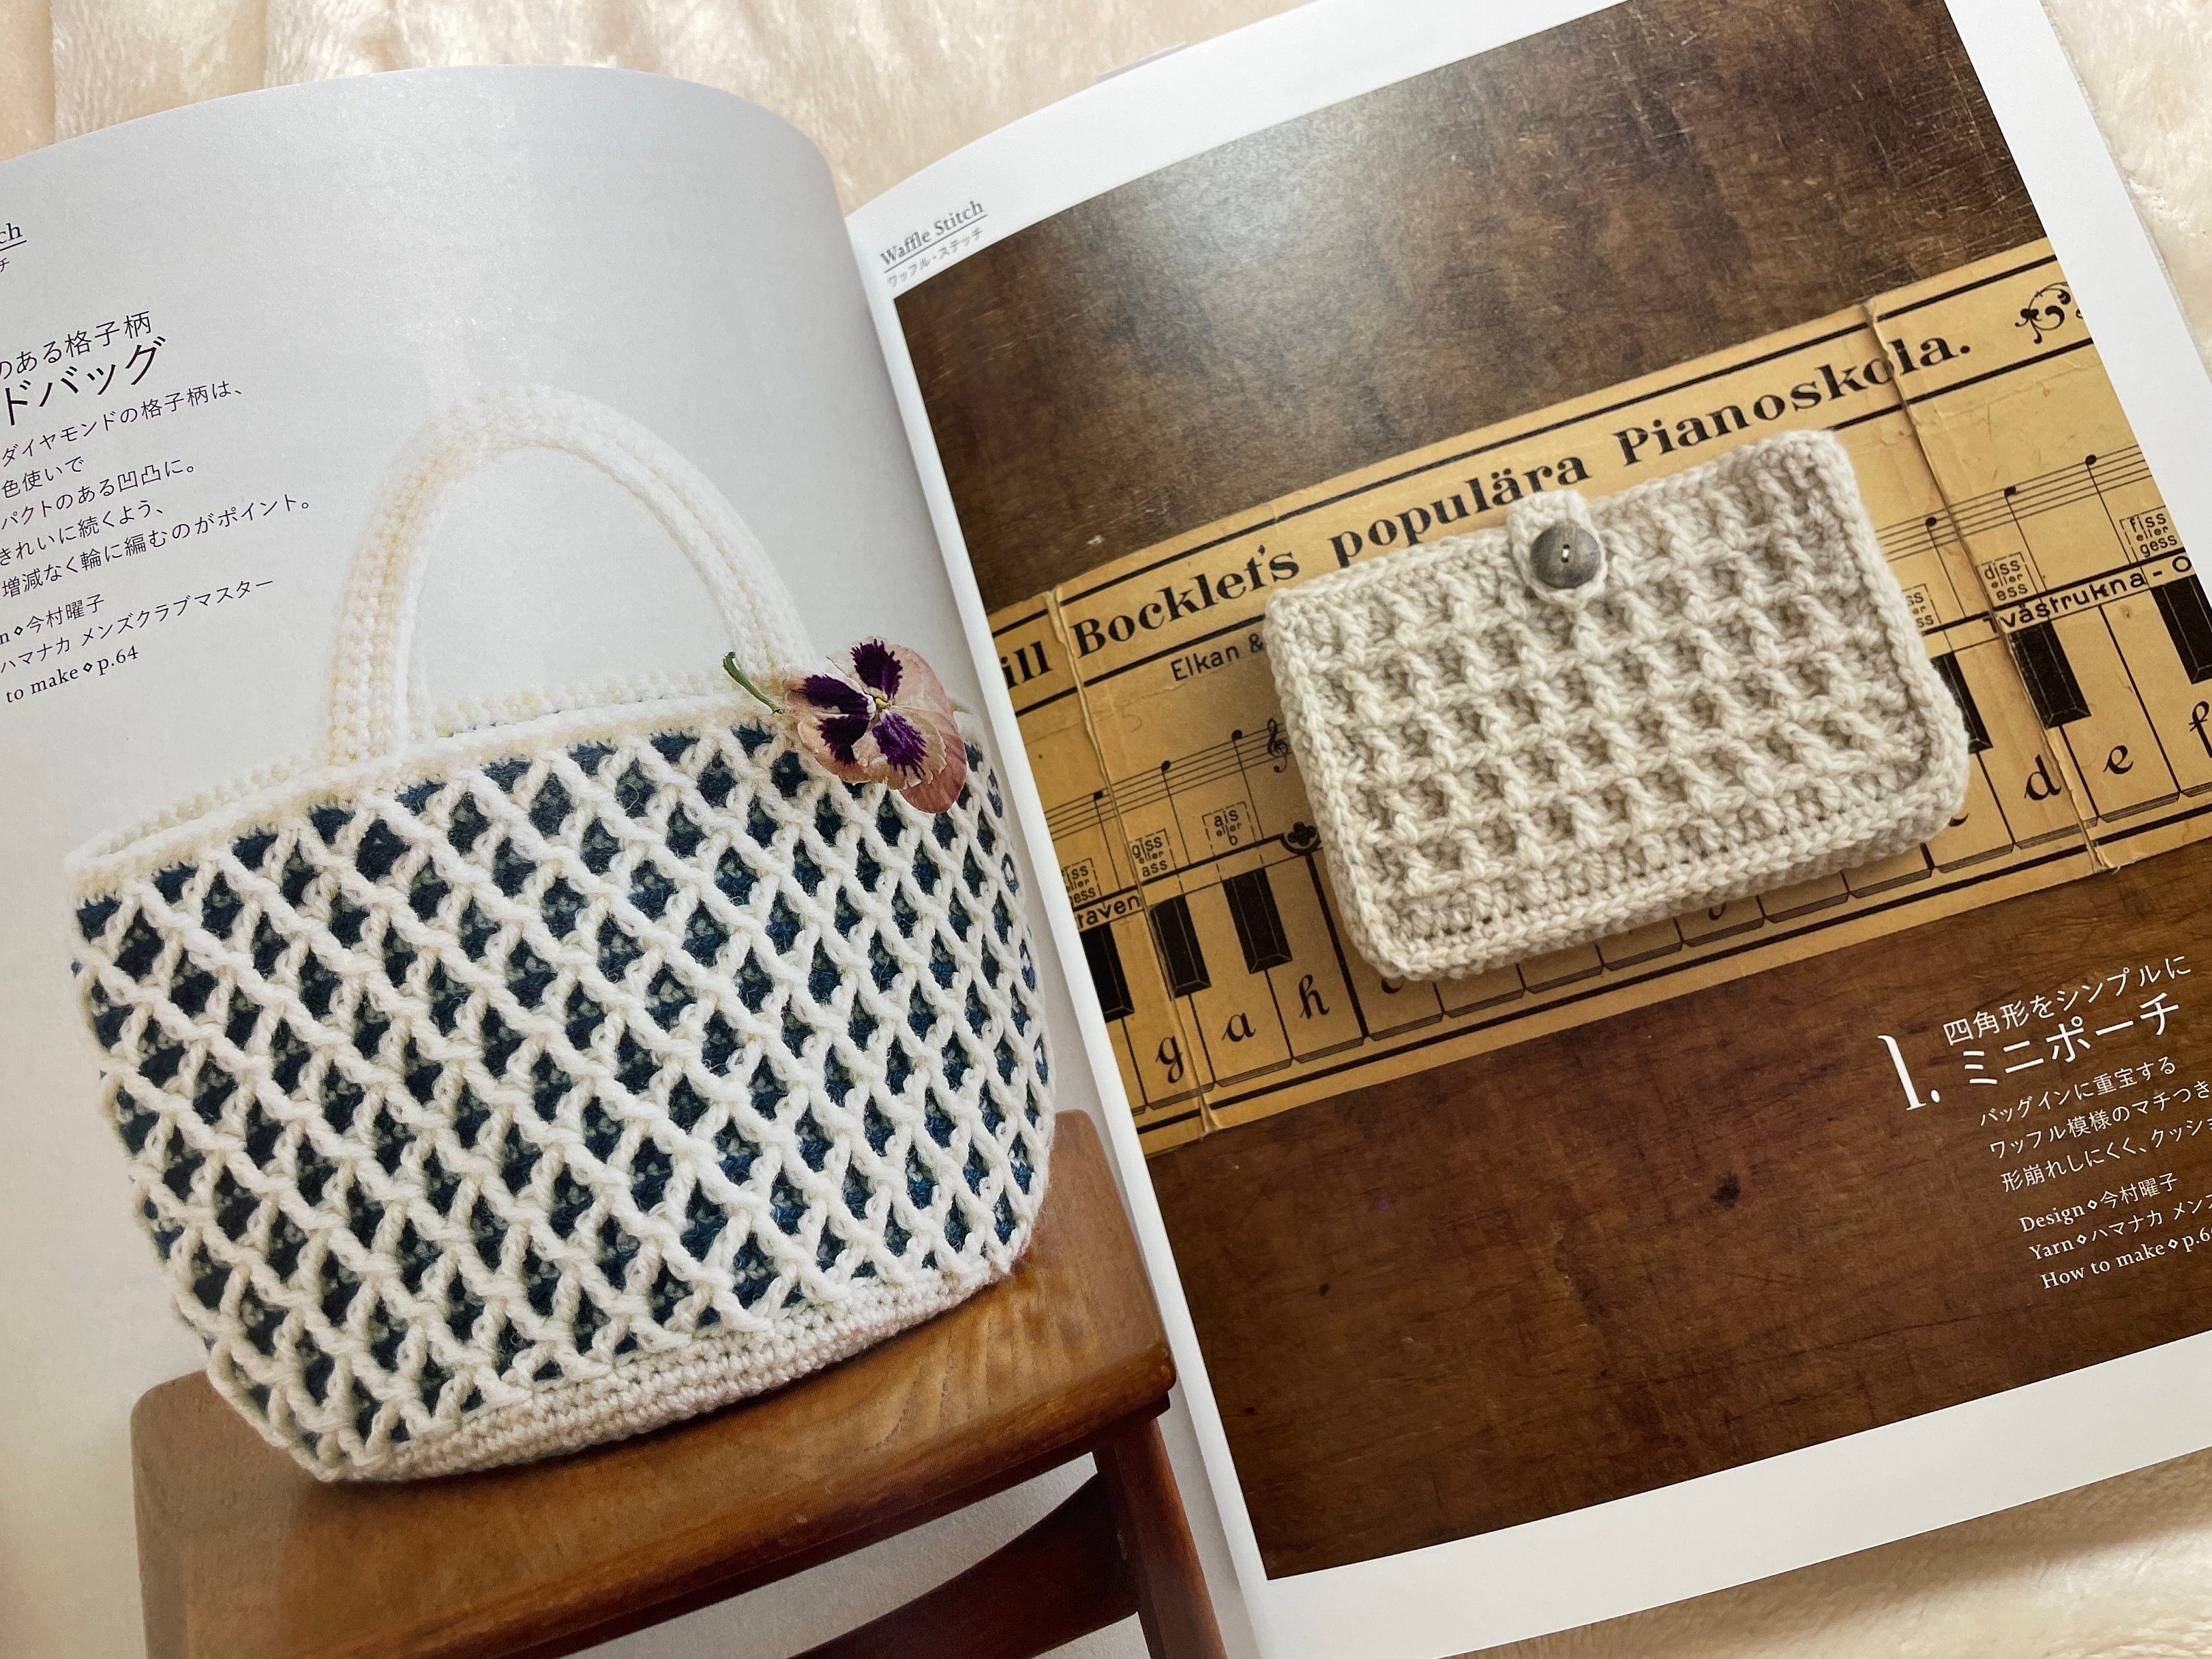 Wonder Crochet Nice Items Libro de artesanía japonés -  México